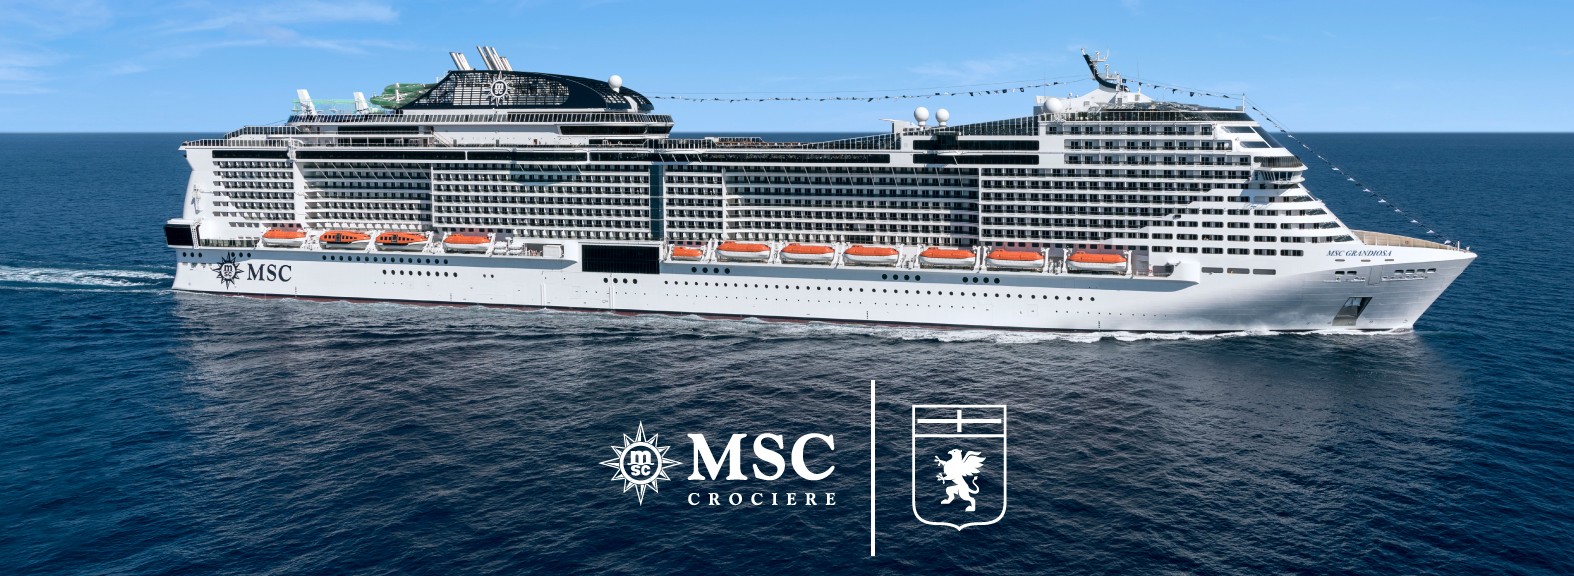 MSC Crociere nuovo partner del Genoa